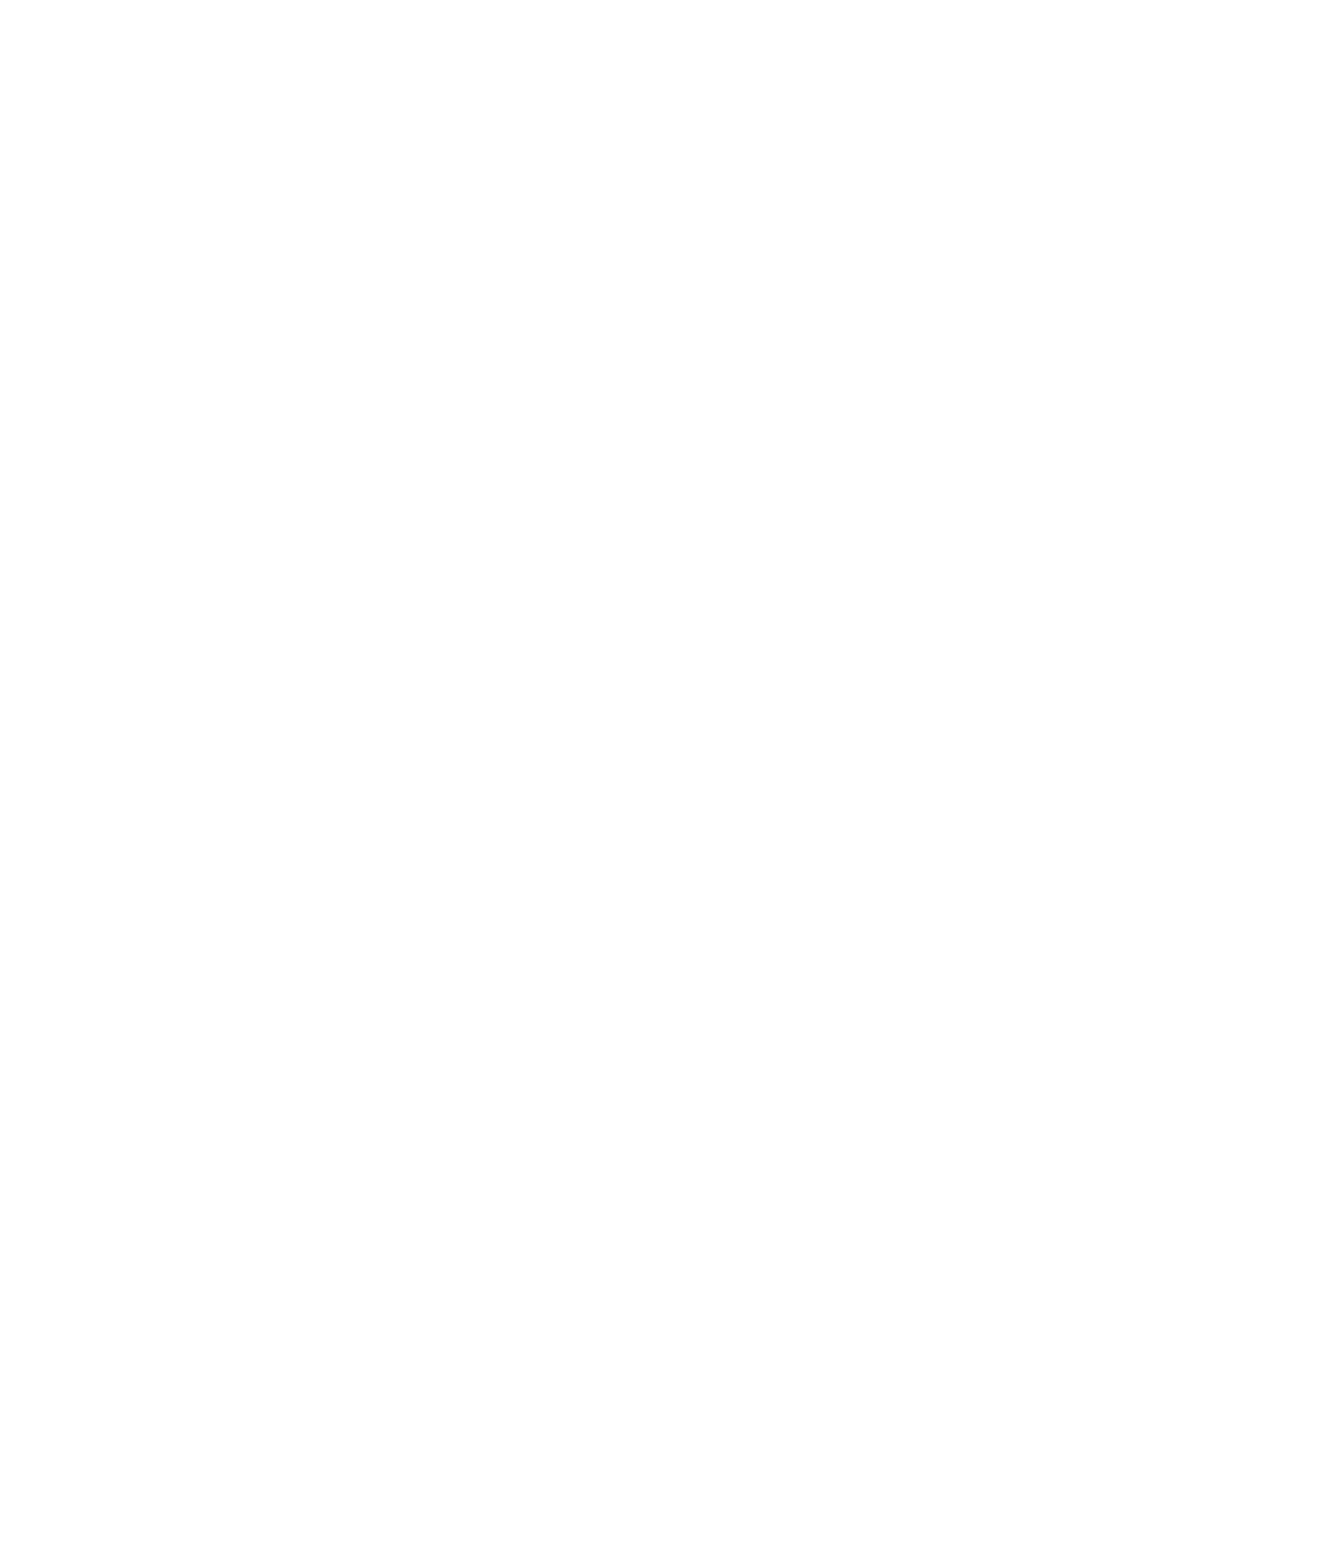 Sonoco logo for dark backgrounds (transparent PNG)